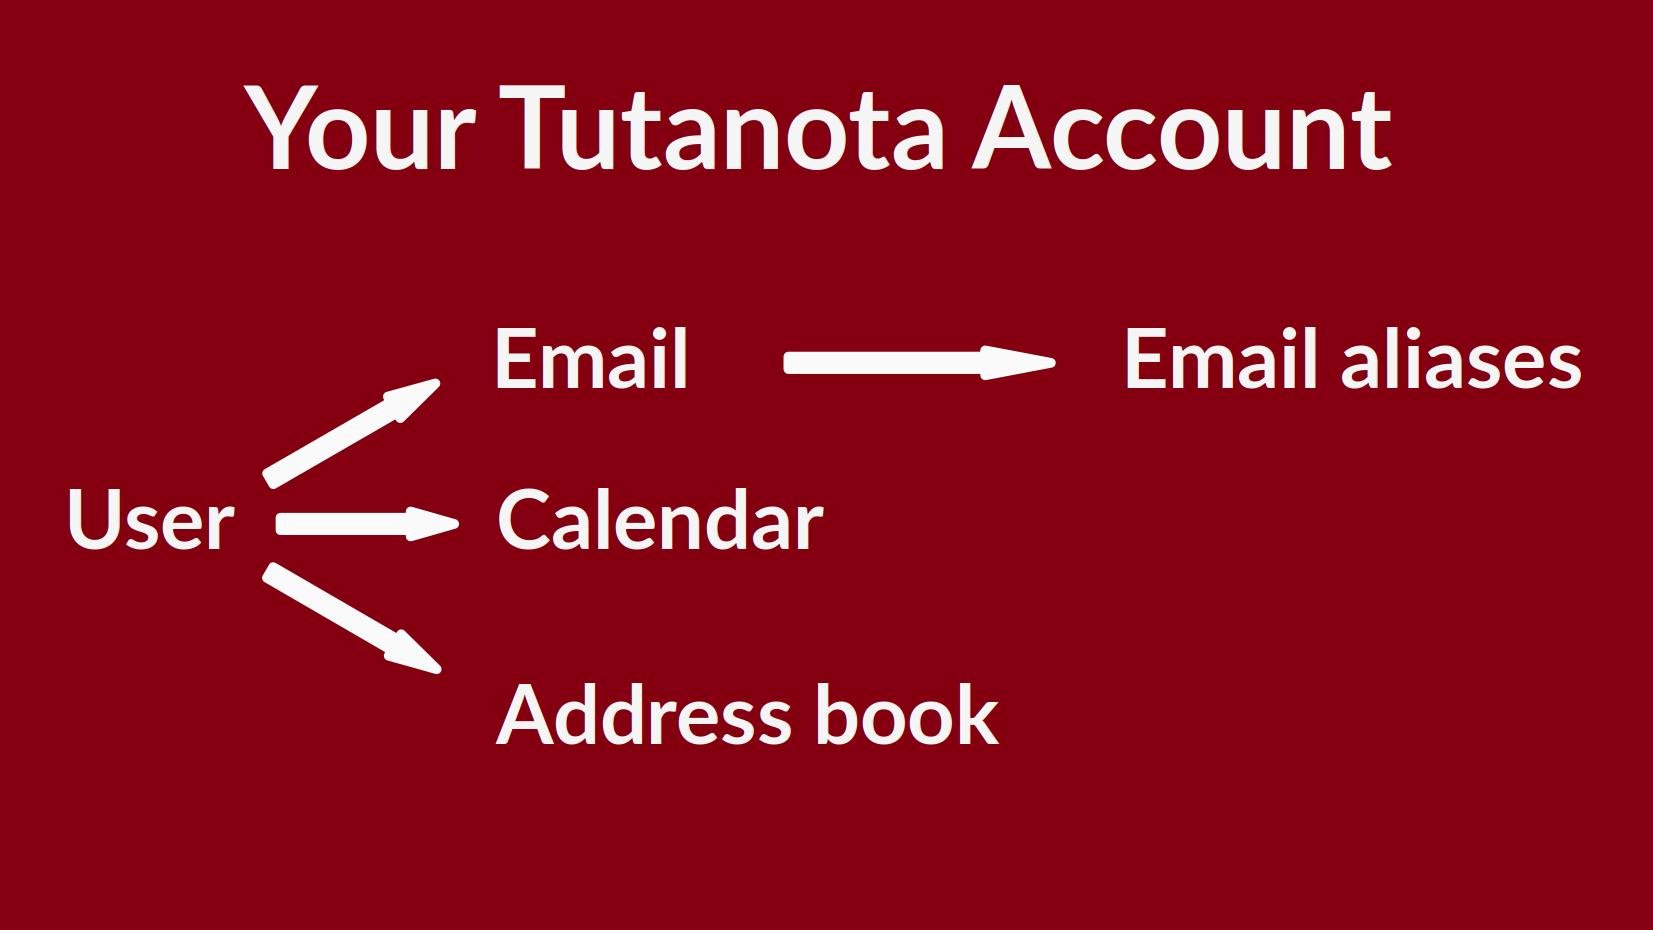 Your Tutanota account has email plus aliases, calendar and address book.